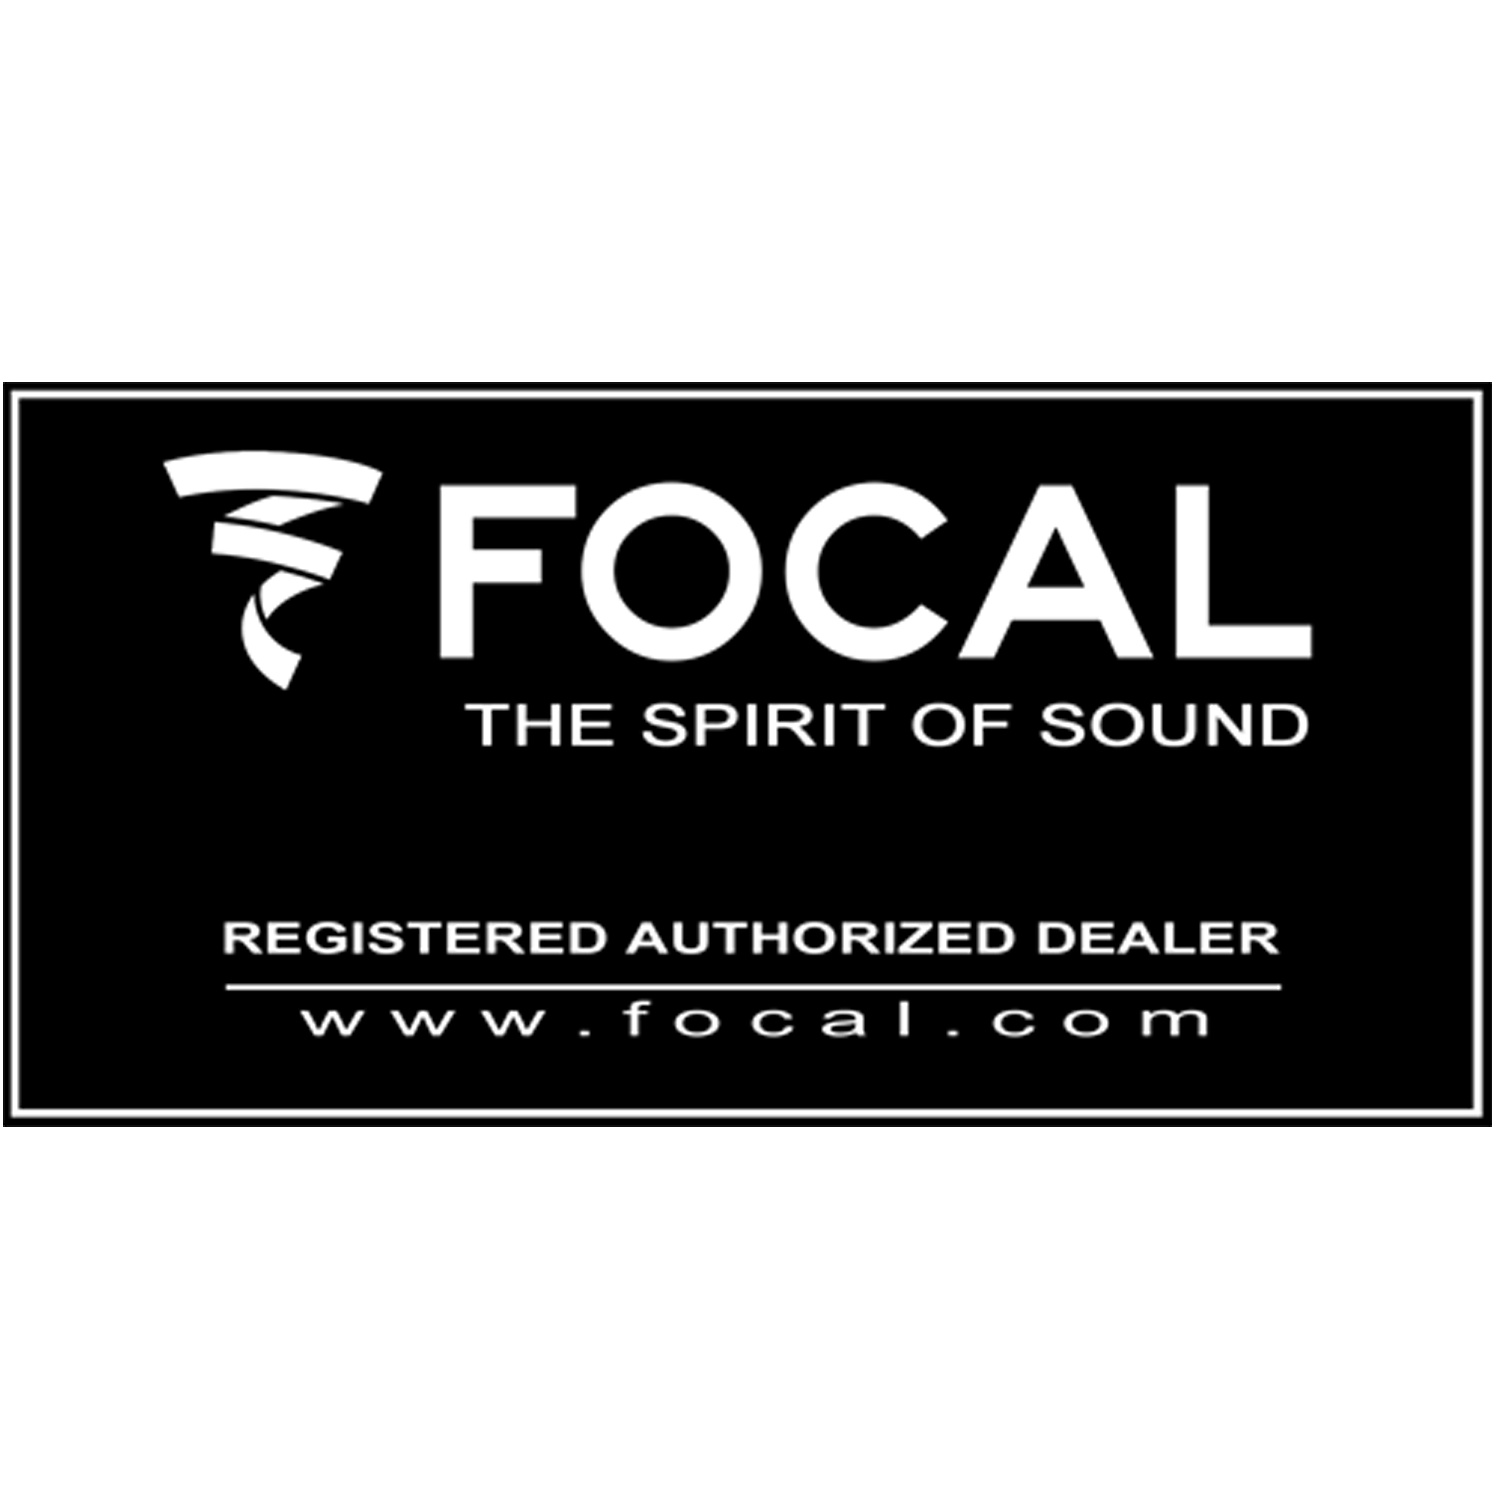 Focal Authorized Dealer